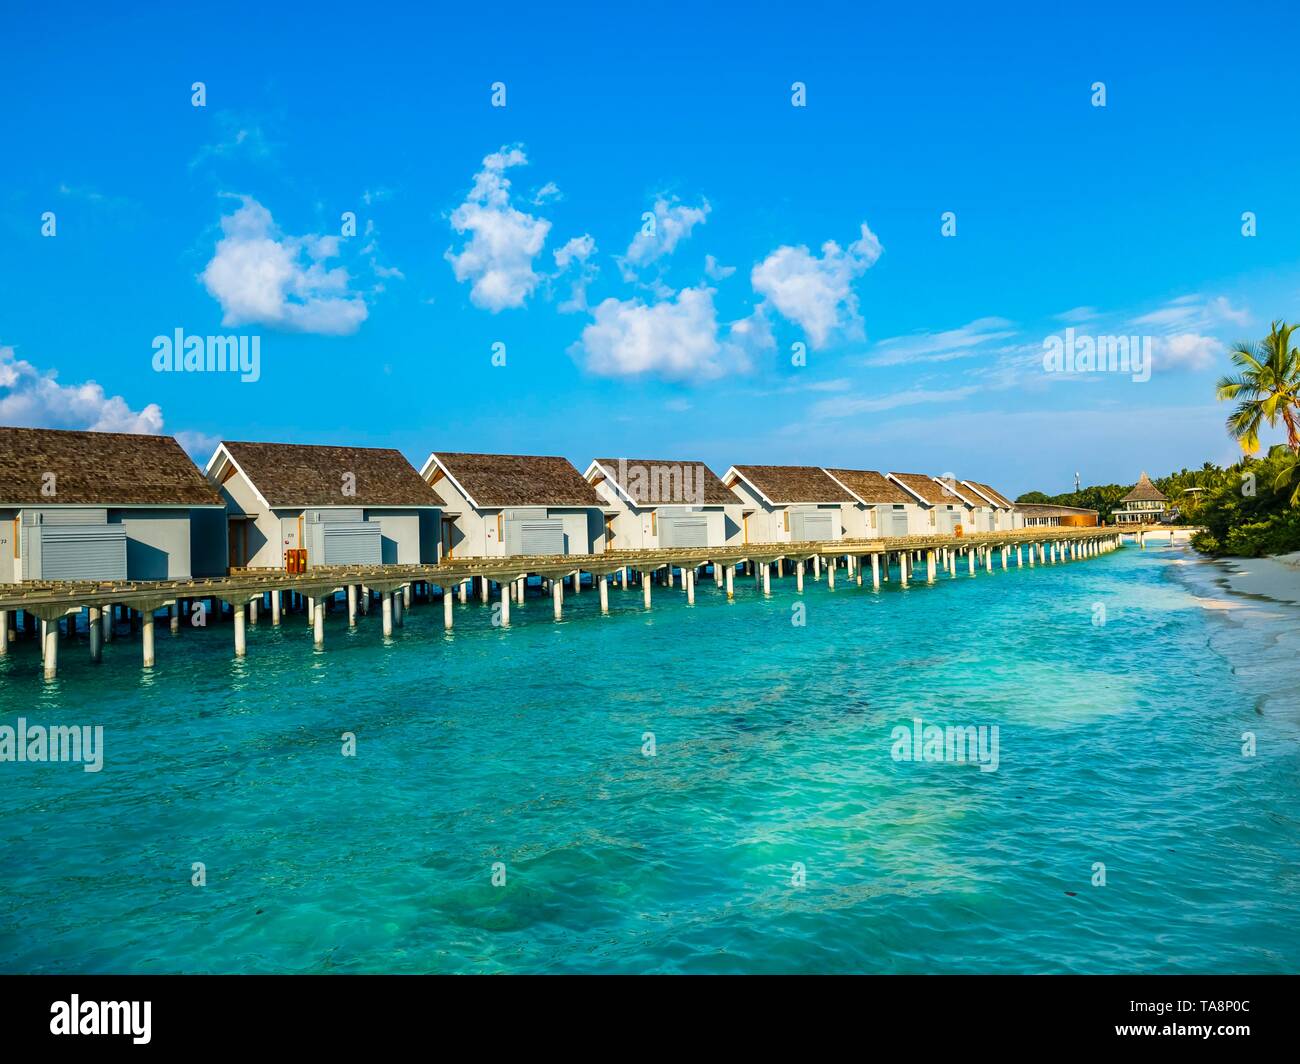 Hotel complex with stilt houses in turquoise water, resort, hotel island Kuramathi, Rsadoo atoll, Maldives Stock Photo